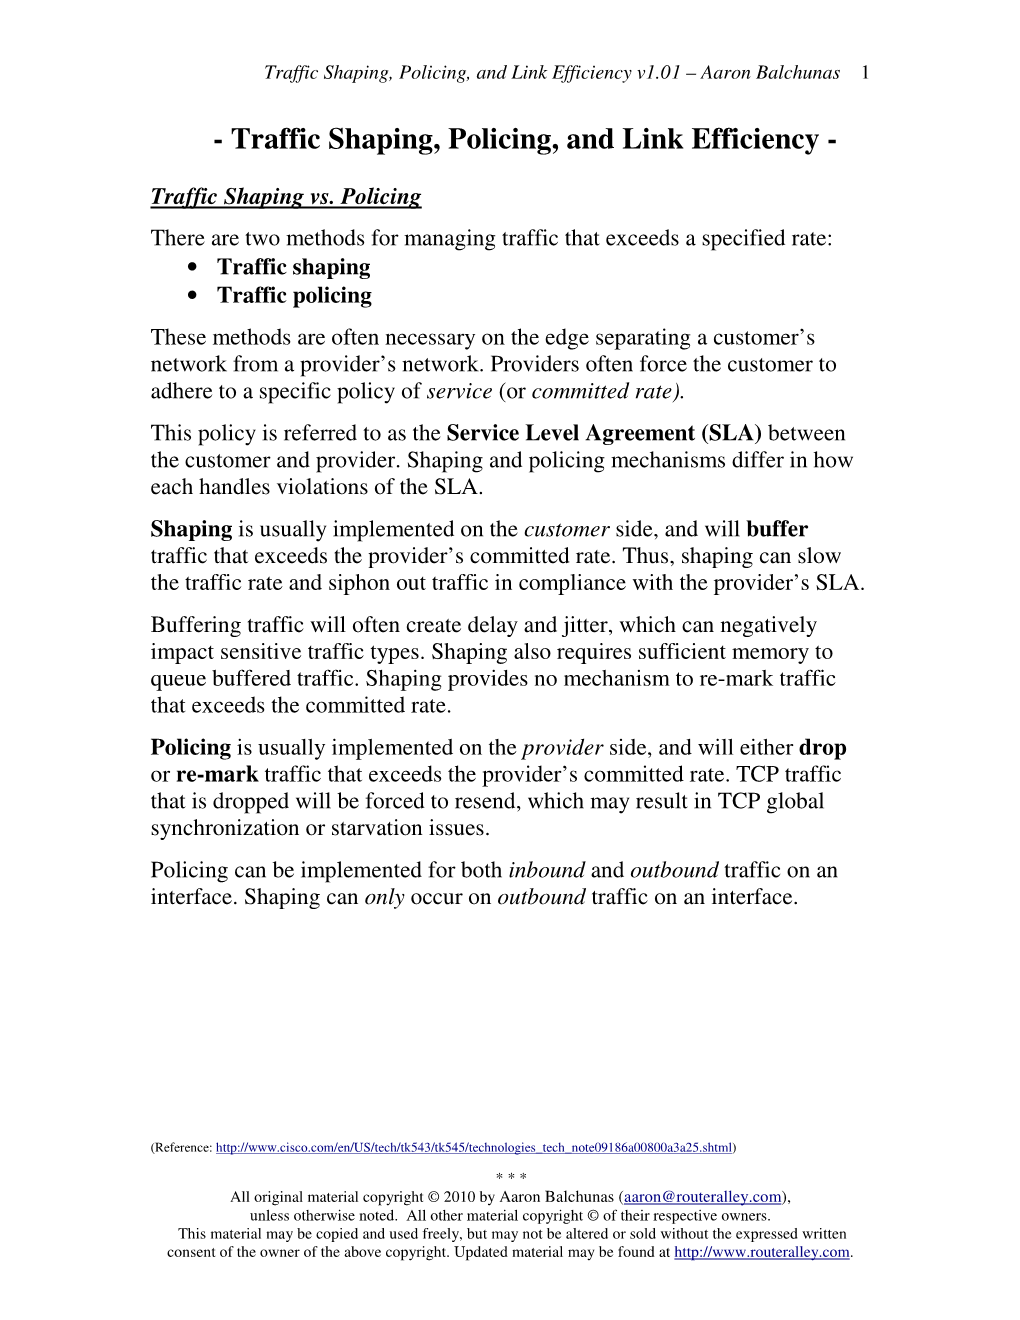 Traffic Shaping, Policing, and Link Efficiency V1.01 – Aaron Balchunas 1